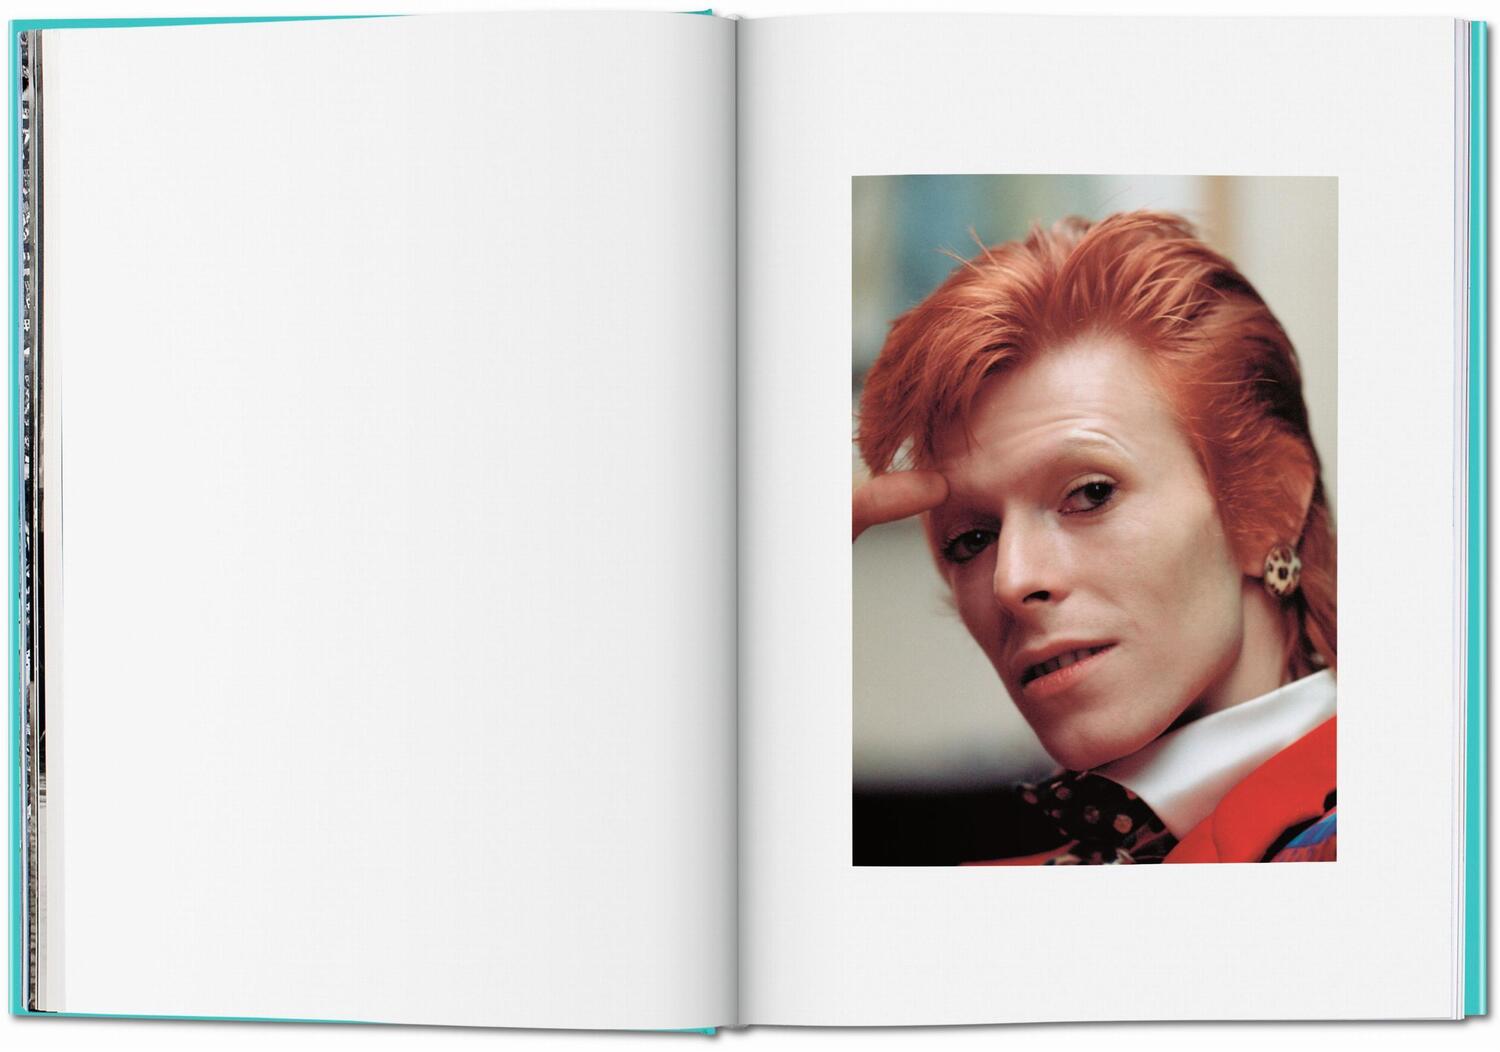 Bild: 9783836596220 | Mick Rock. The Rise of David Bowie. 1972-1973 | Barney Hoskyns (u. a.)